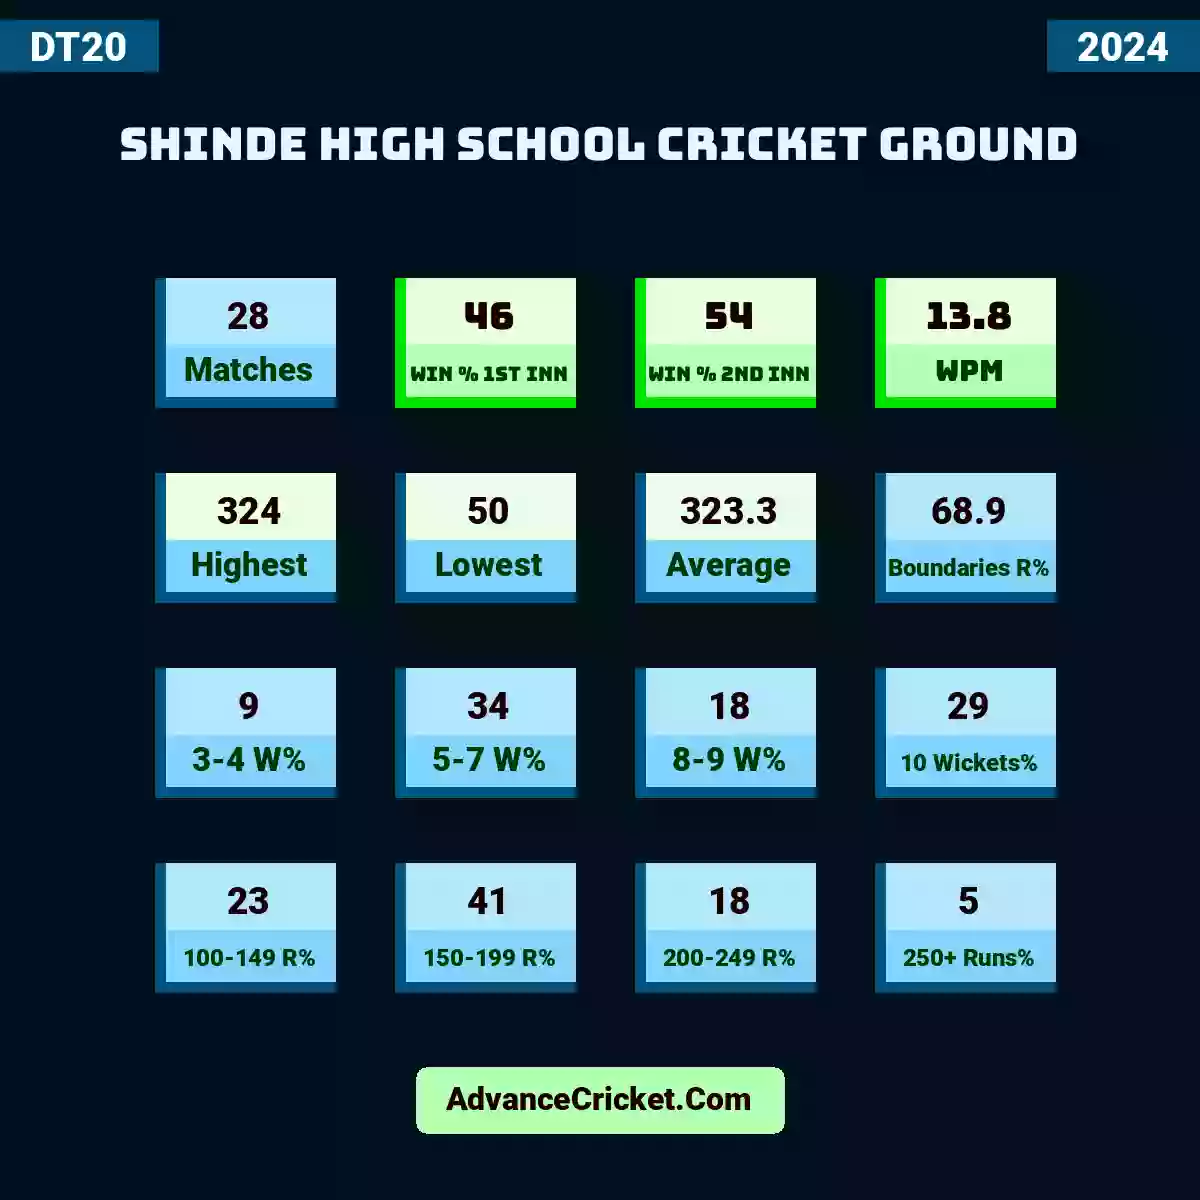 Image showing Shinde High School Cricket Ground DT20 2024 with Matches: 28, Win % 1st Inn: 46, Win % 2nd Inn: 54, WPM: 13.8, Highest: 324, Lowest: 50, Average: 323.3, Boundaries R%: 68.9, 3-4 W%: 9, 5-7 W%: 34, 8-9 W%: 18, 10 Wickets%: 29, 100-149 R%: 23, 150-199 R%: 41, 200-249 R%: 18, 250+ Runs%: 